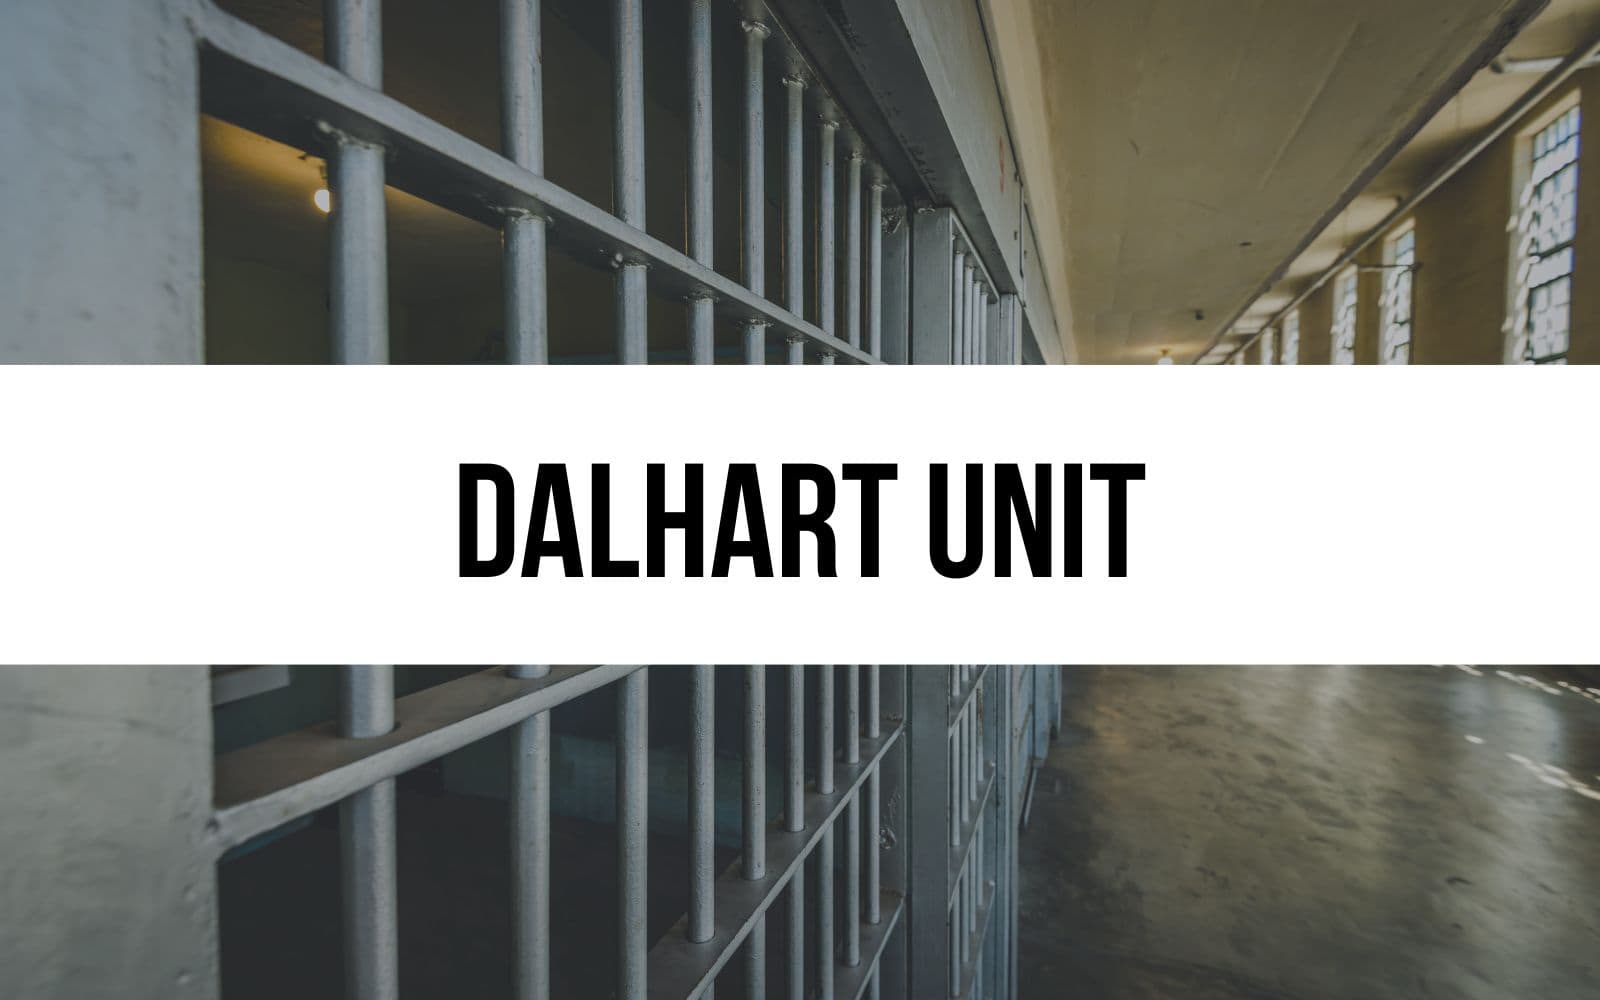 Dalhart Unit